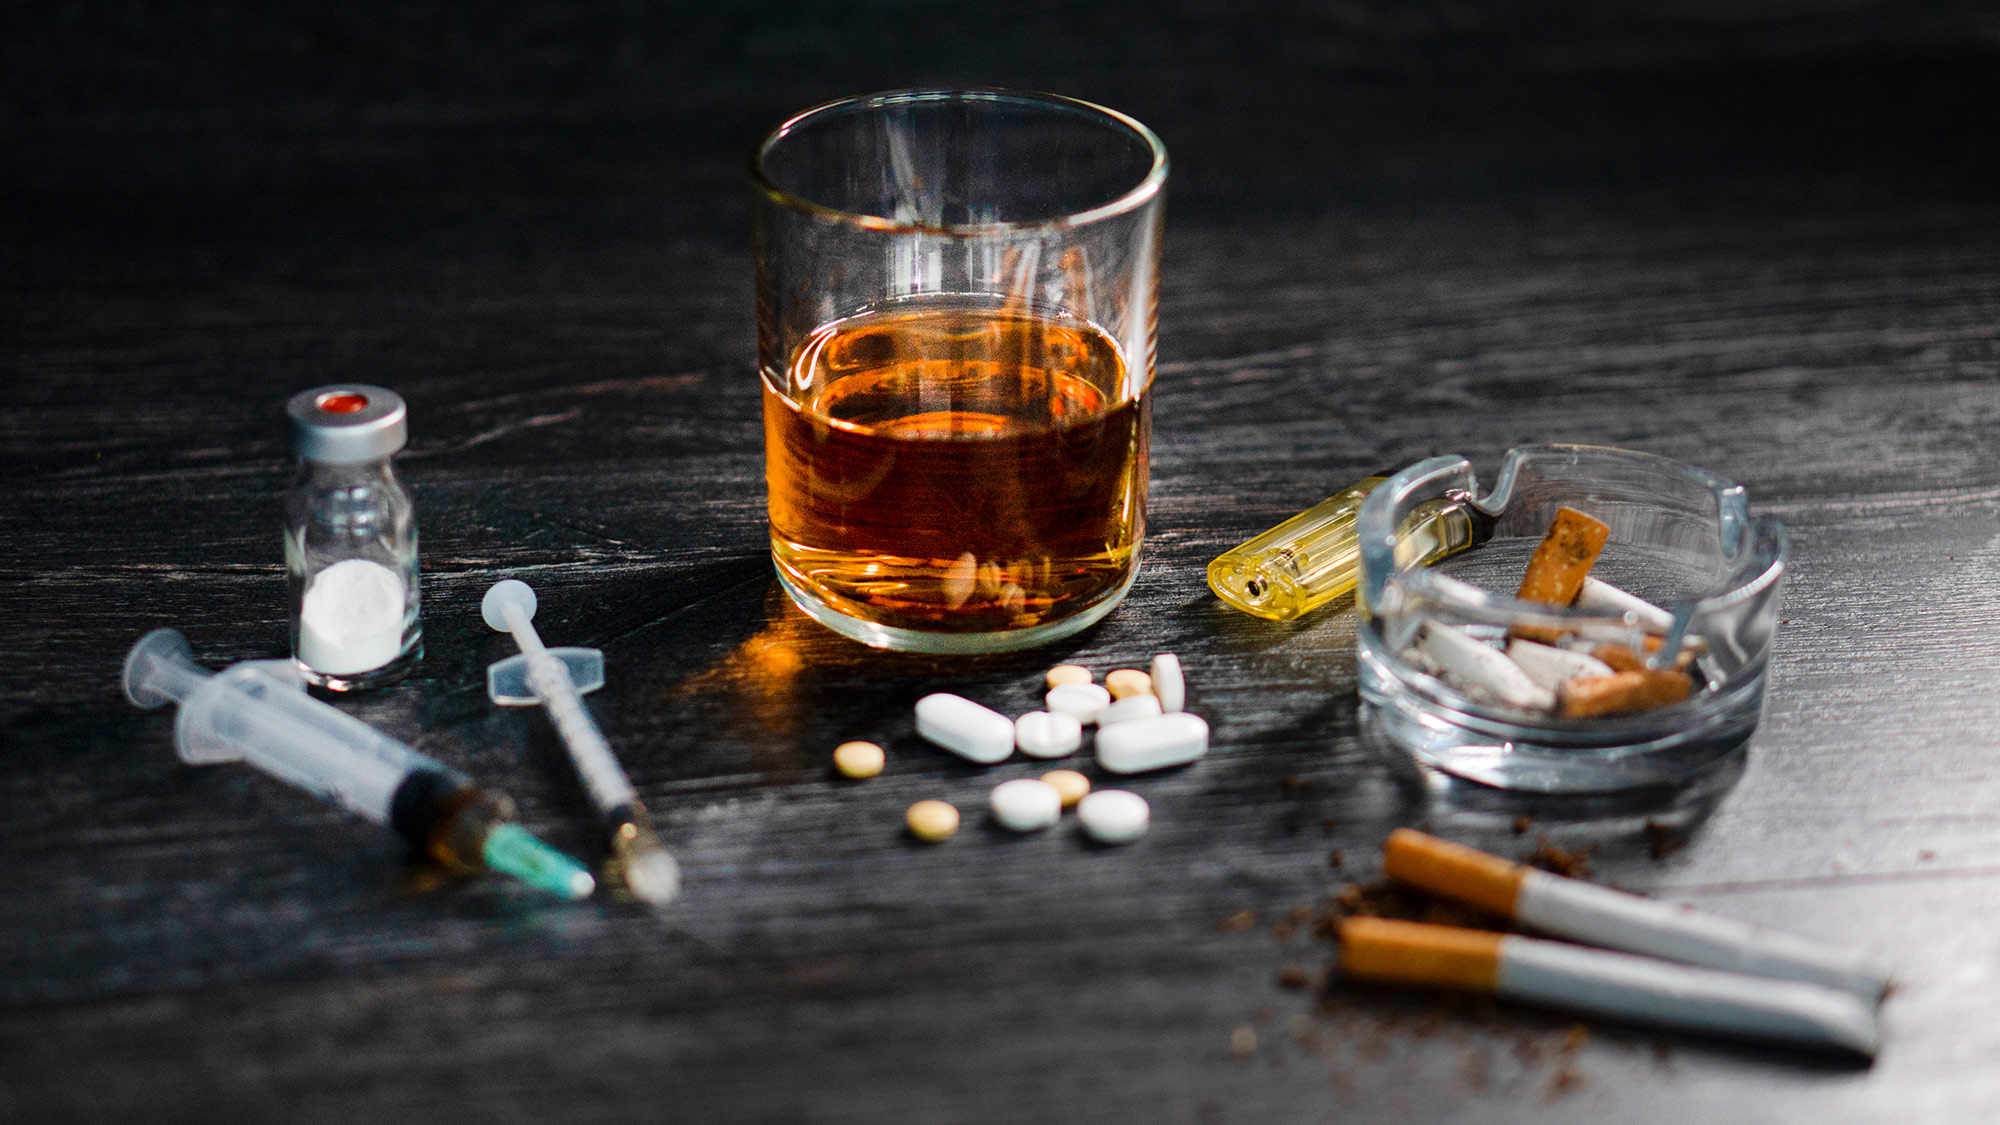 Misery, Self-Medicine and Substance addiction